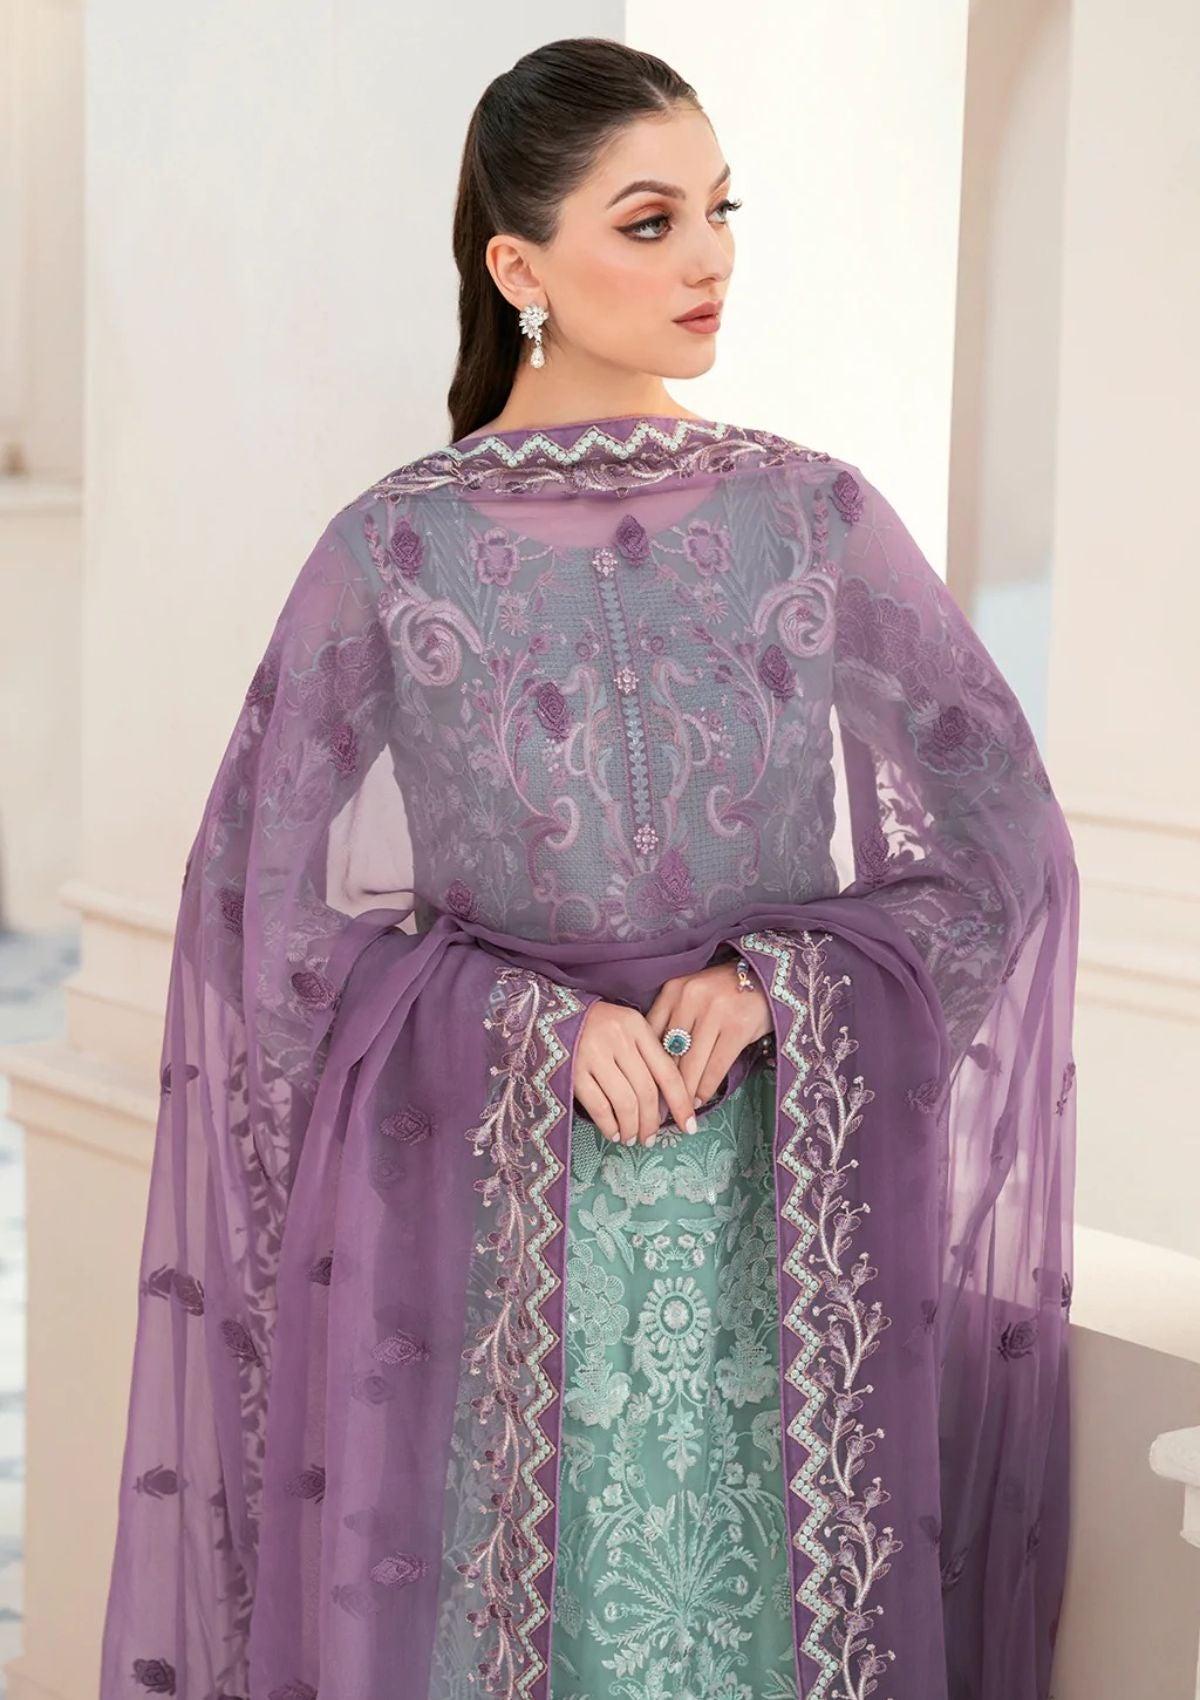 Formal Collection - Ramsha - Rangoon - V09 - D#902 available at Saleem Fabrics Traditions